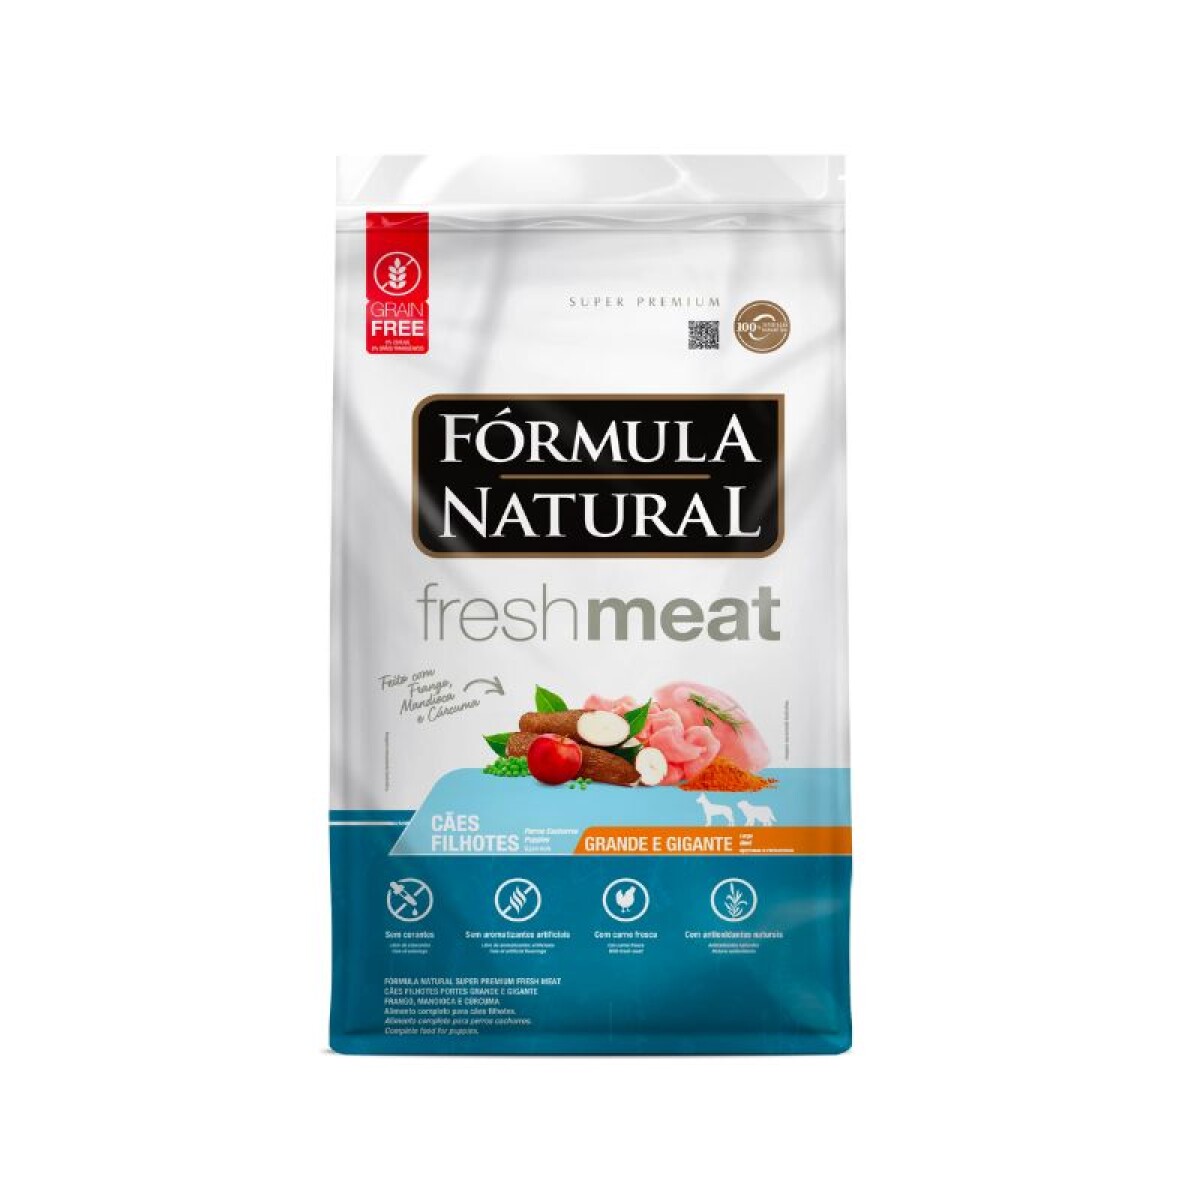 FORMULA NATURAL FRESH MEAT CACH. RG 2.5KG - Formula Natural Fresh Meat Cach. Rg 2.5kg 